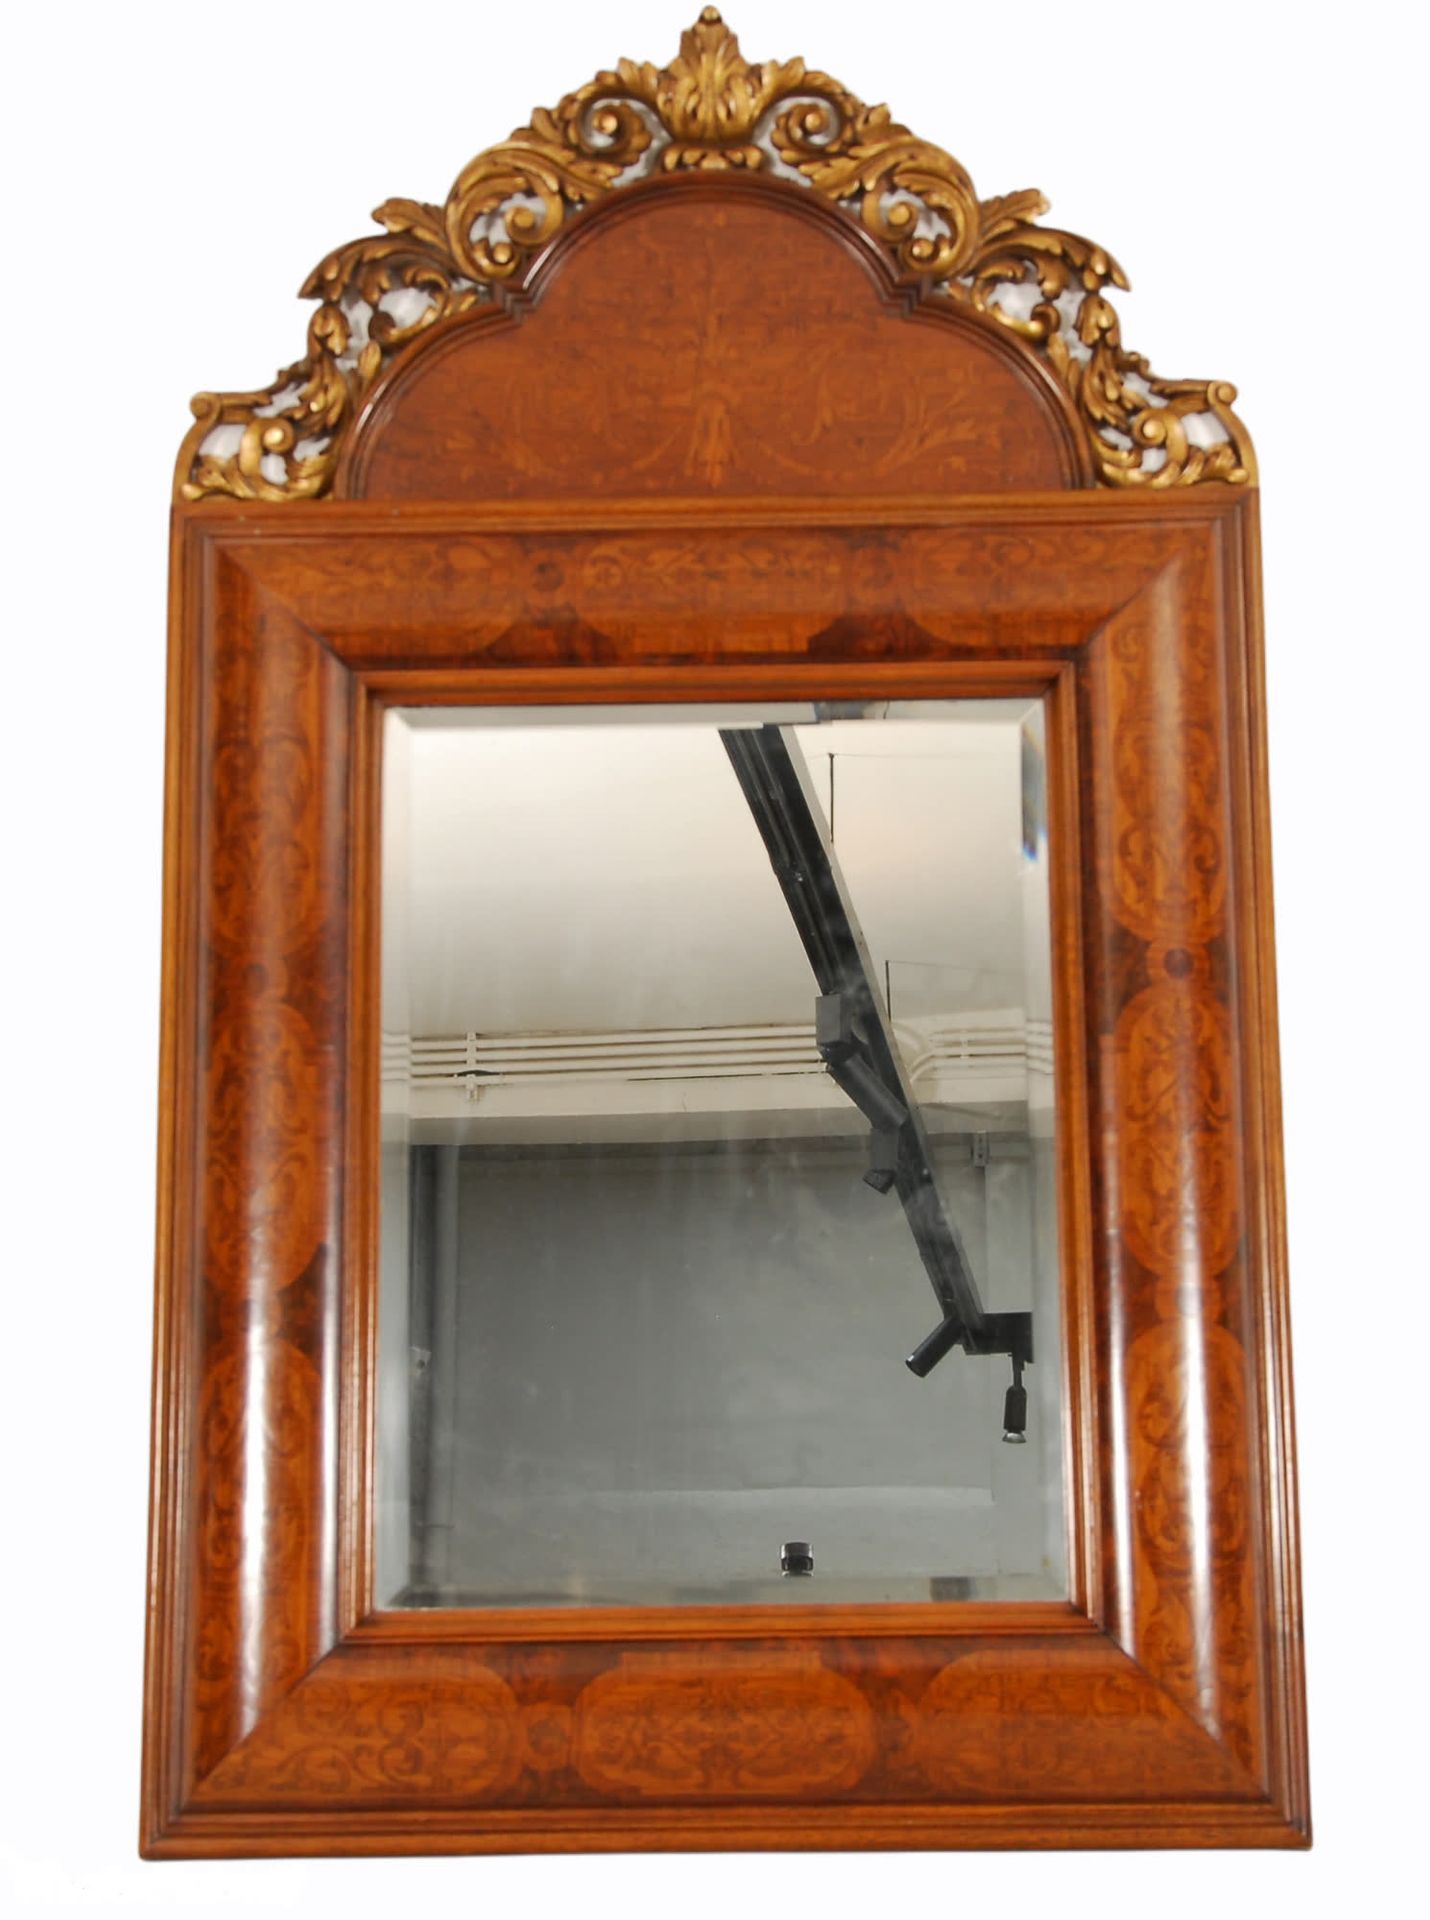 Null A mirror
England, 18th-19th century.
114 x 68 cm.